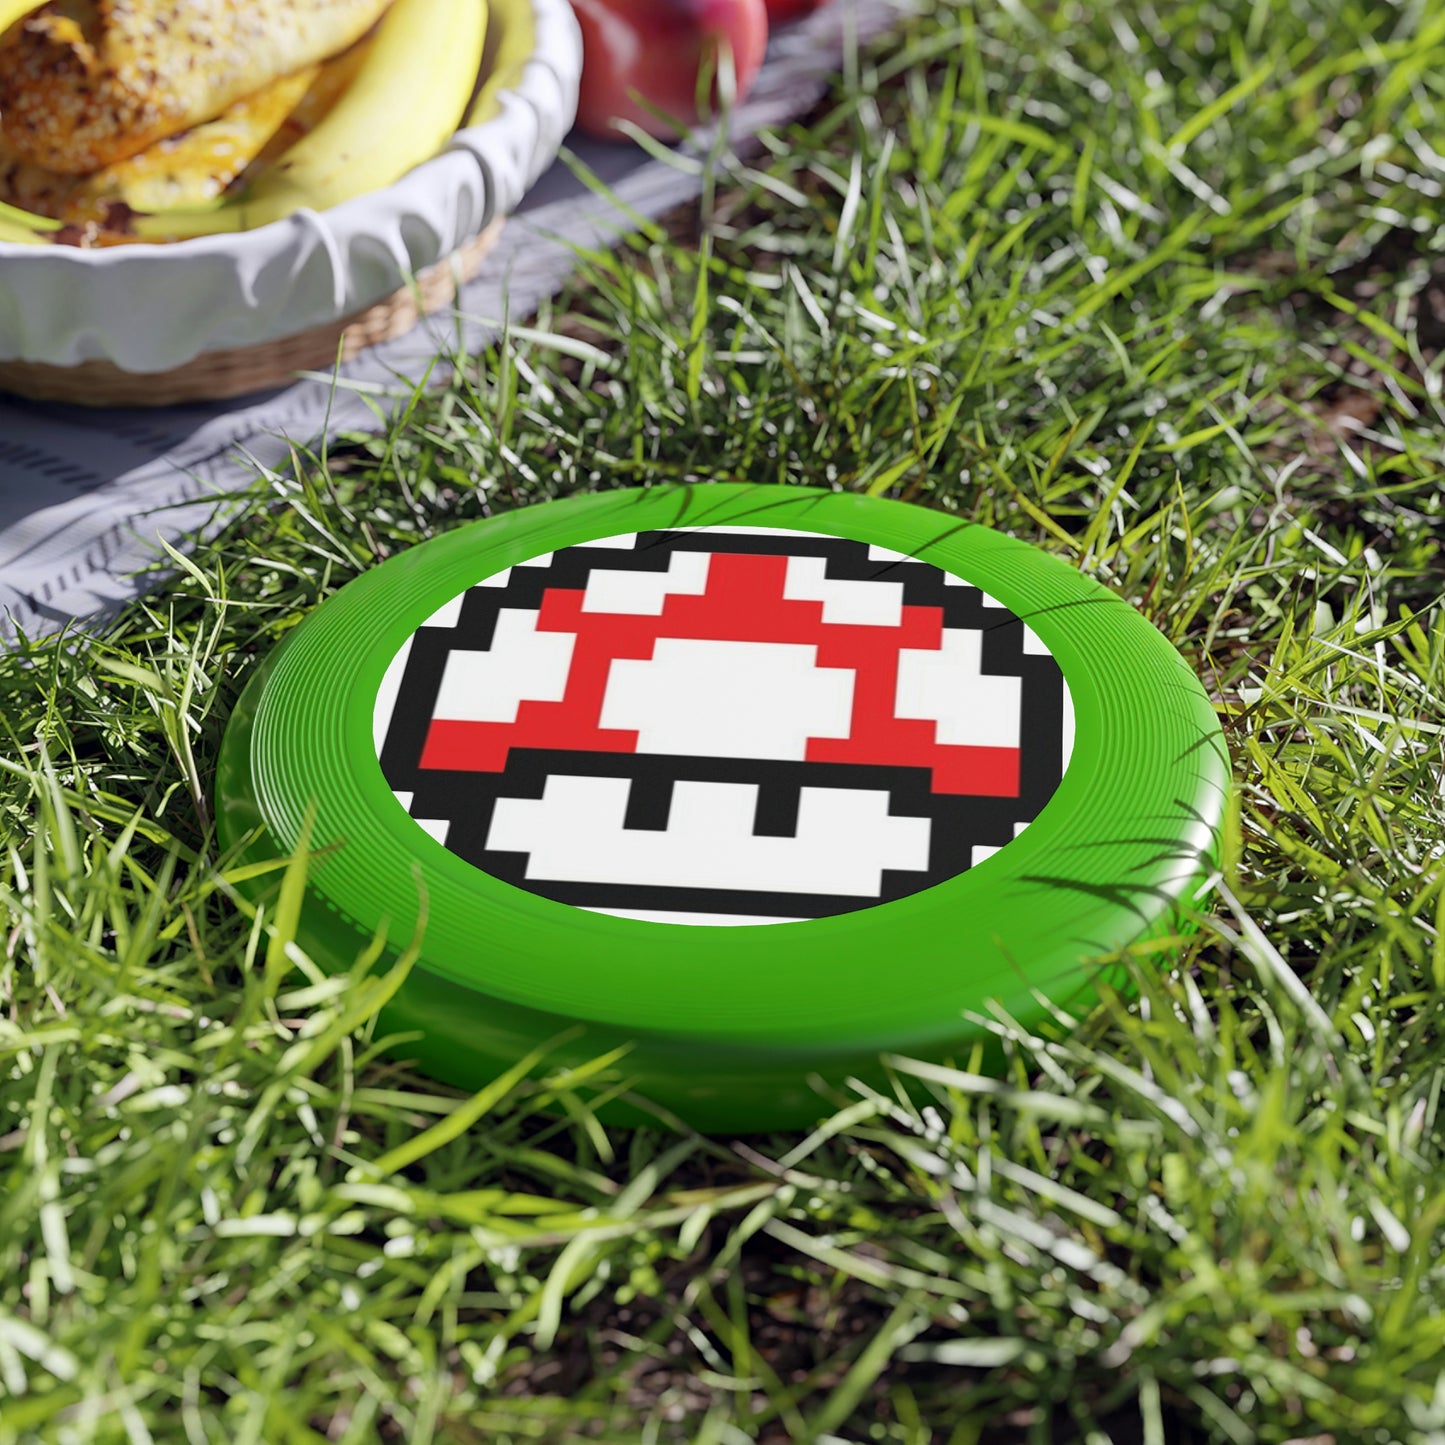 Red 8 Bit Style Mushroom Wham-O Frisbee